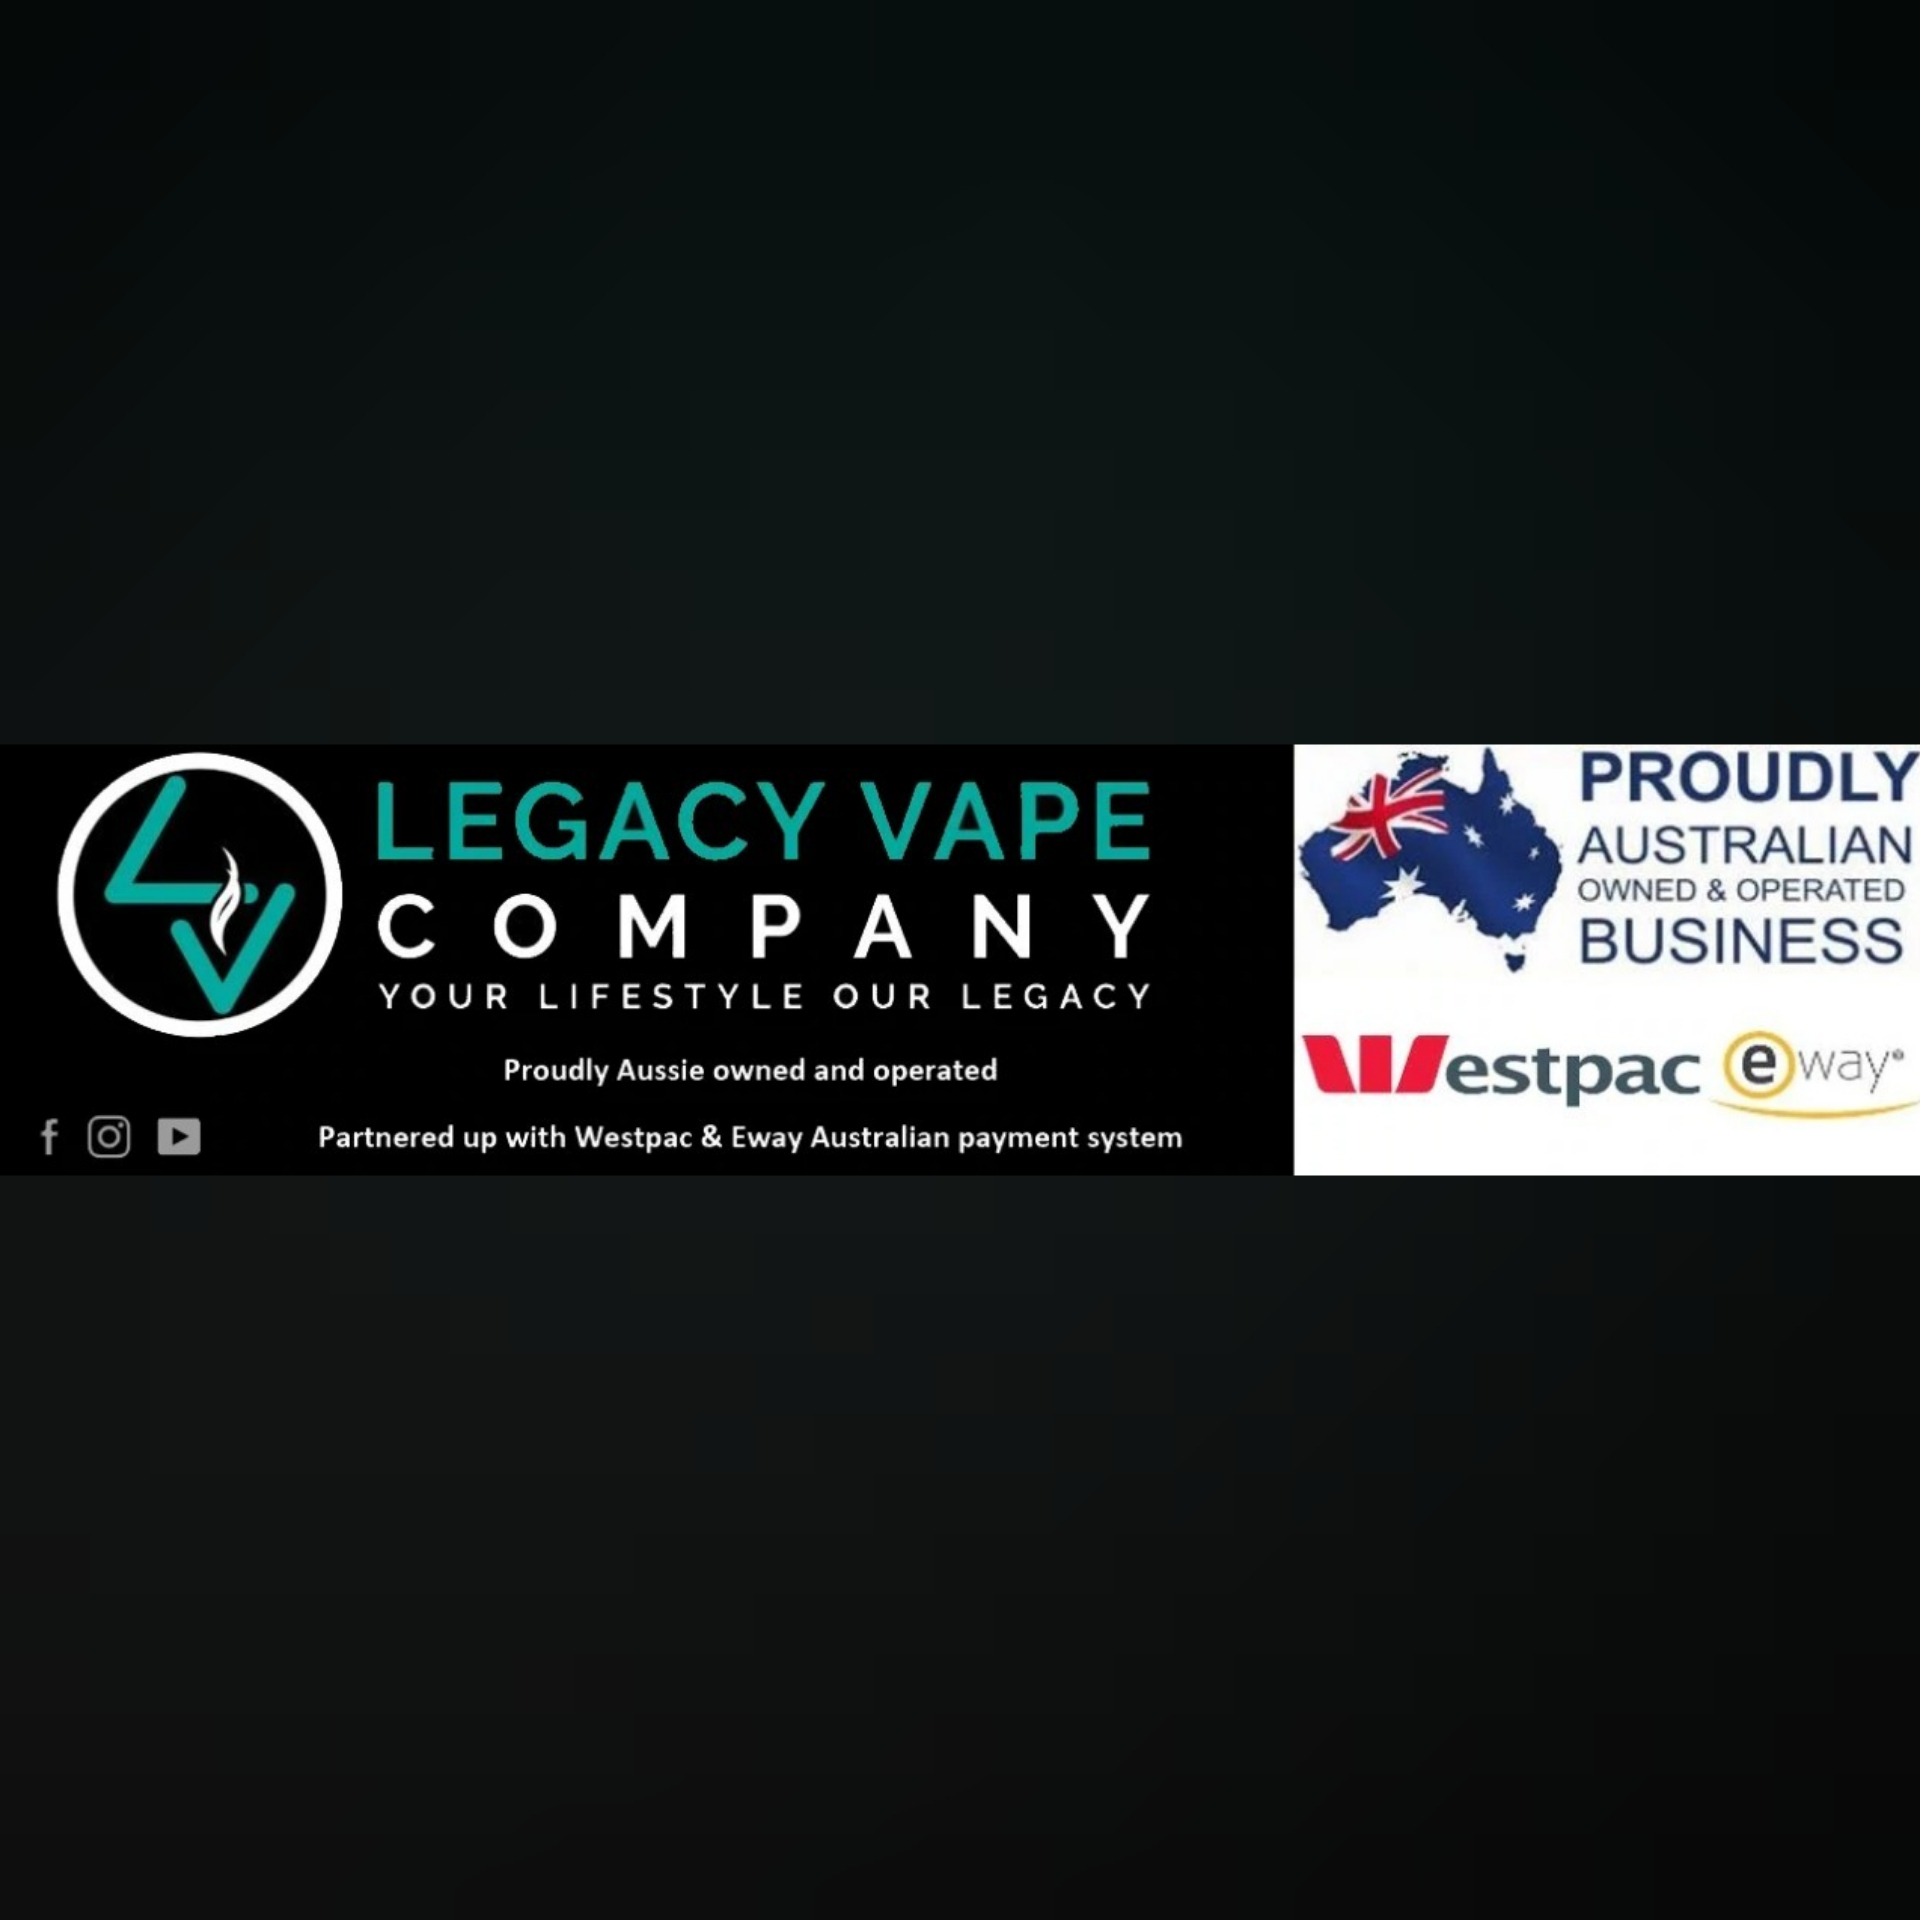 Legacy Vape Company